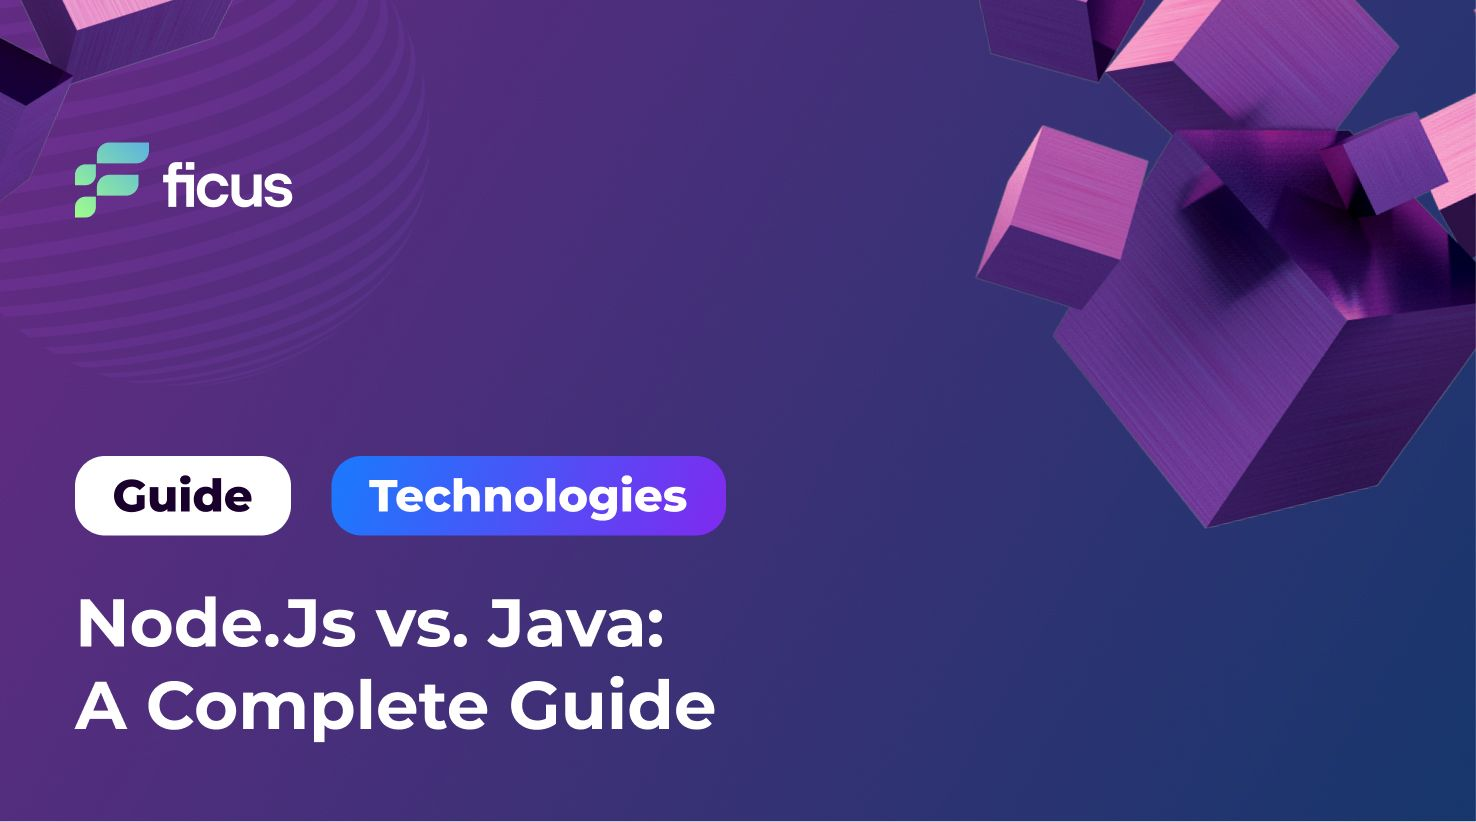 Node.Js vs. Java: A Complete Guide